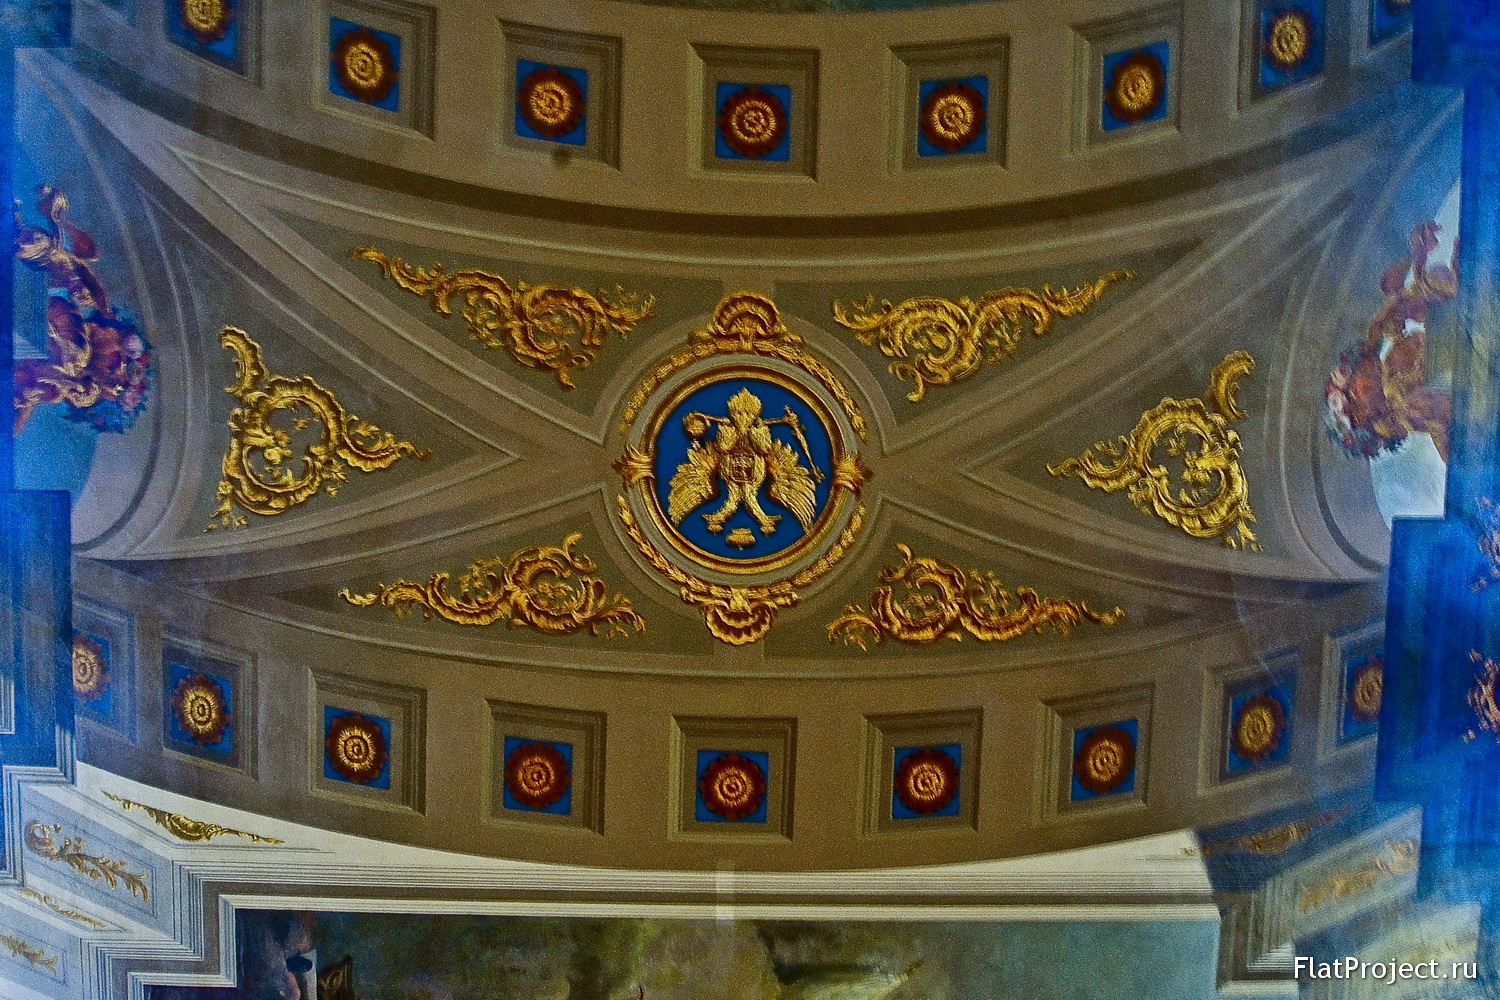 The Catherine Palace interiors – photo 330